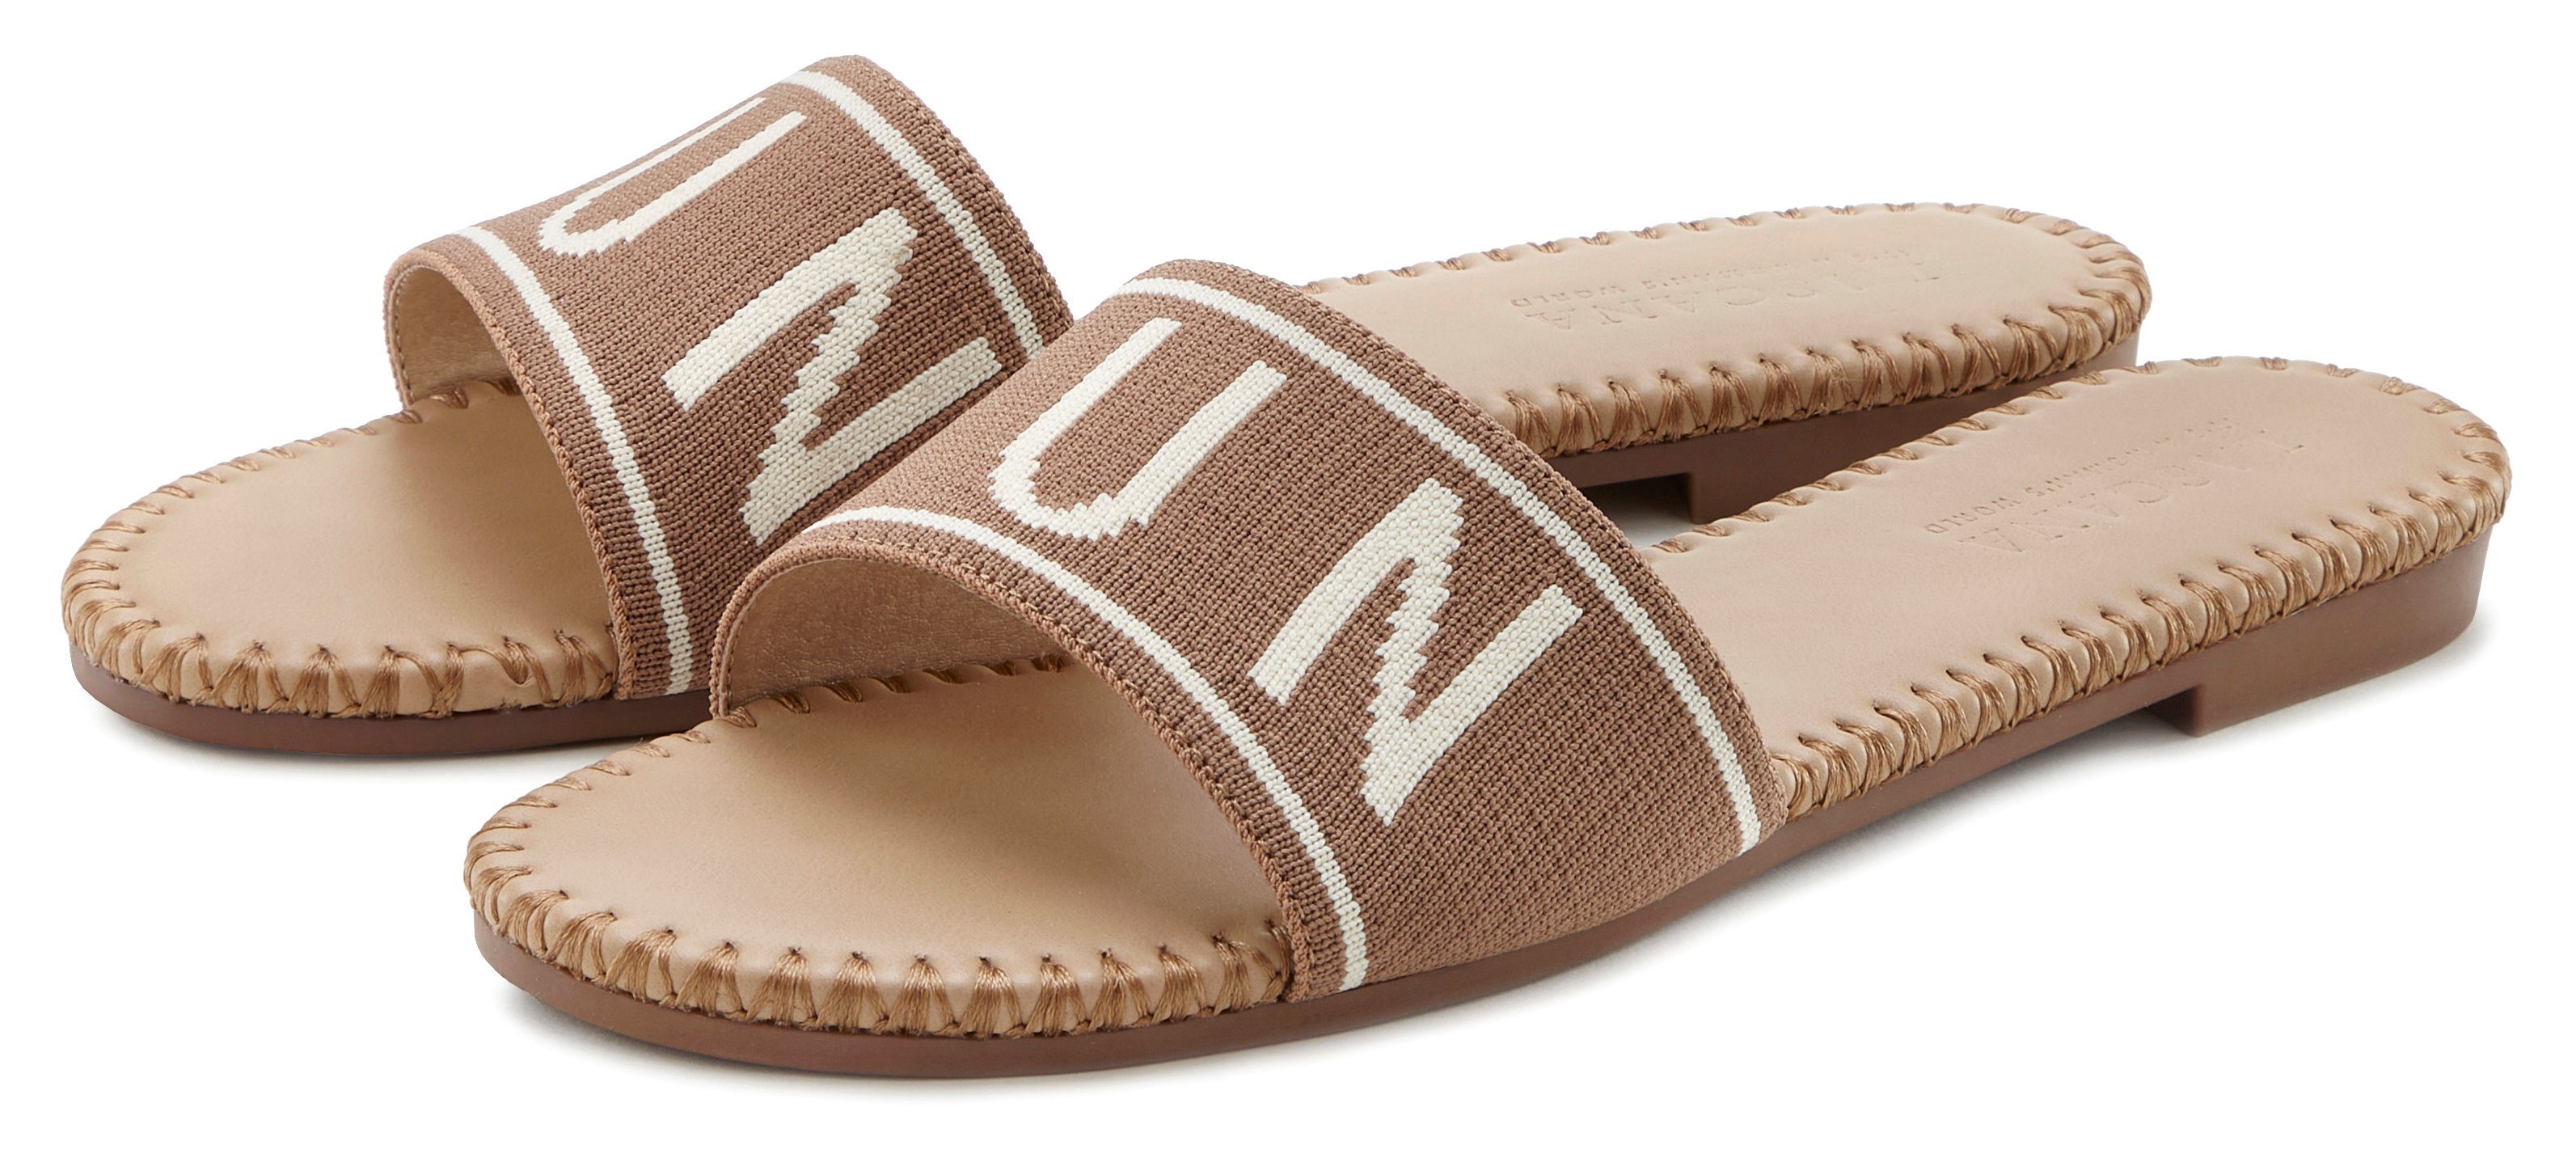 LASCANA Pantolette Mule, Sandale, offener Schuh aus Textil mit modischem Schriftzug VEGAN